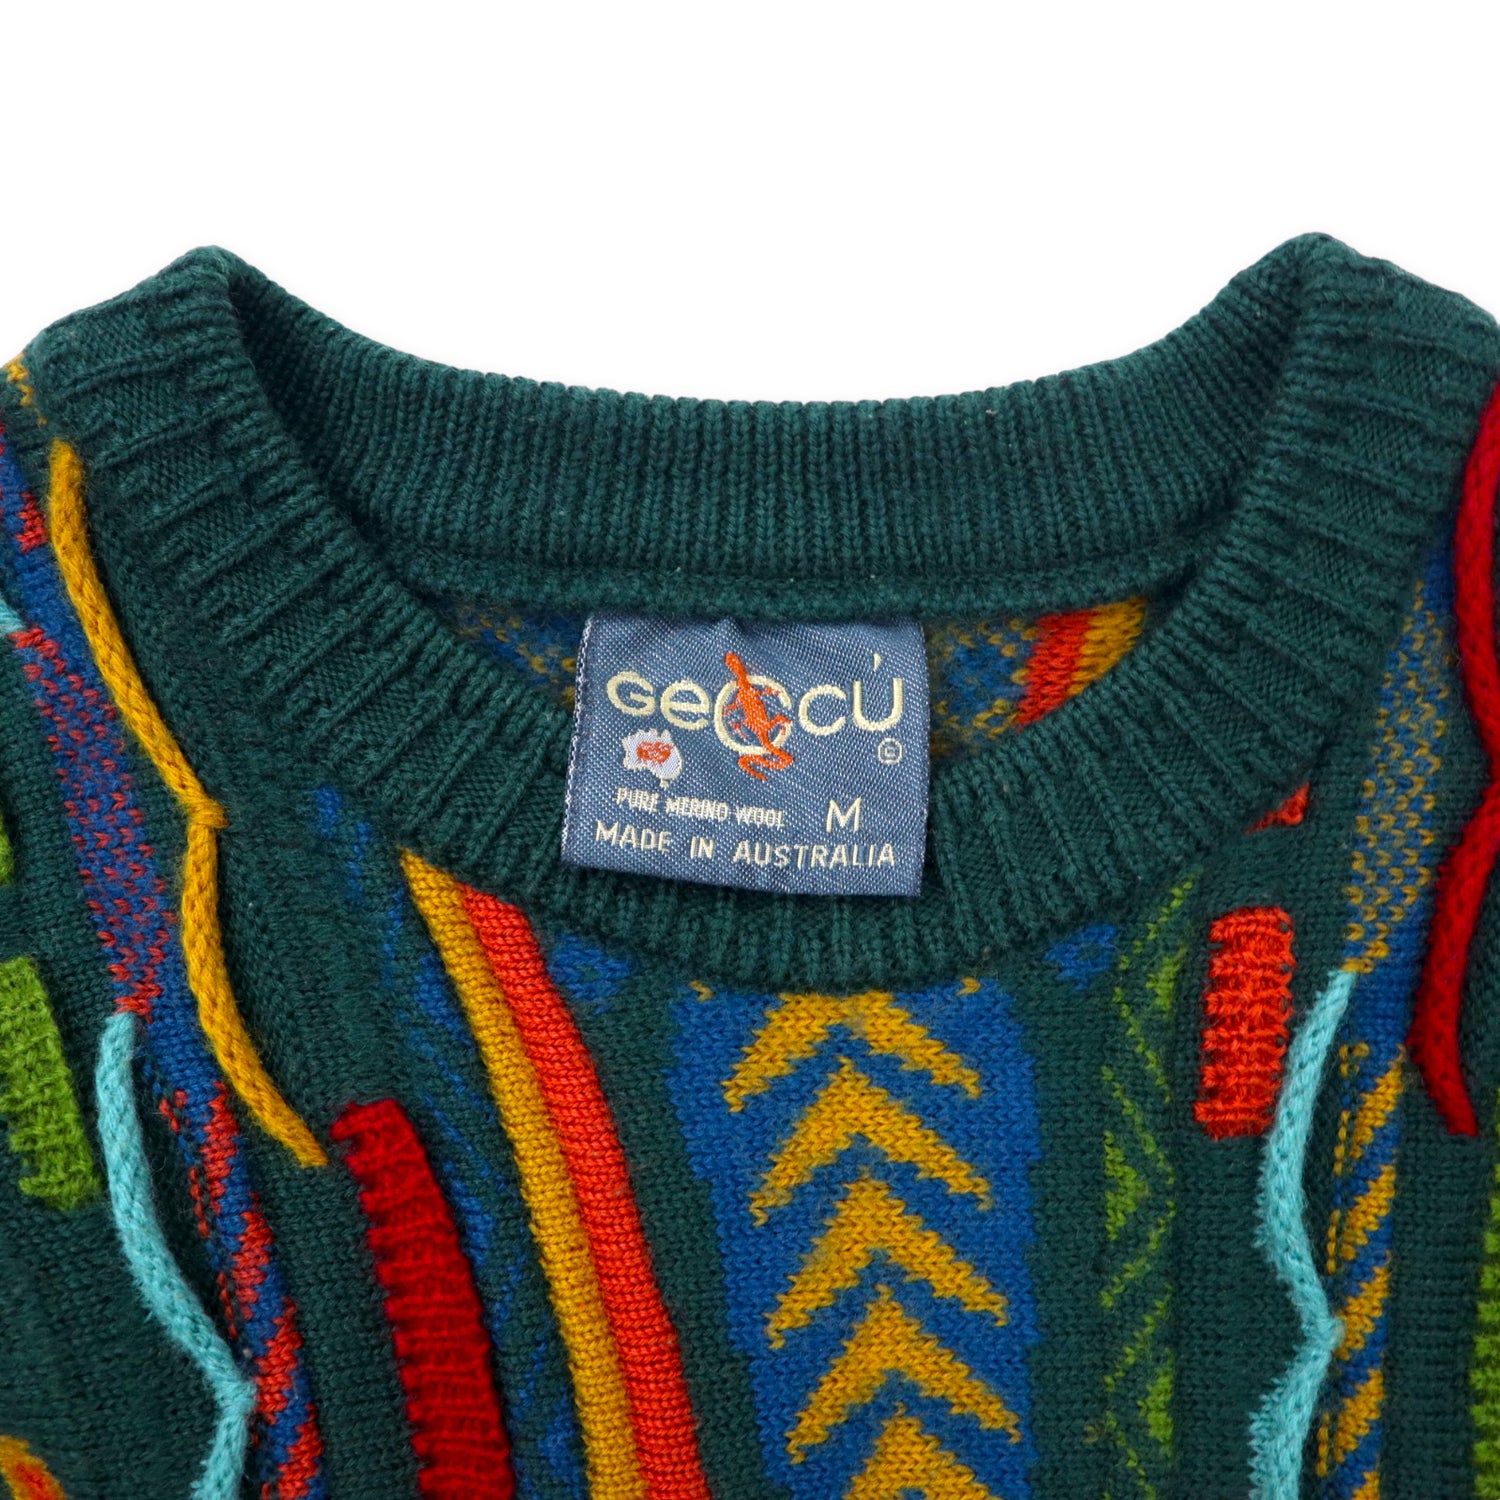 GECCU Australia MADE 3D Knit Sweater M Green Multi Color Wool